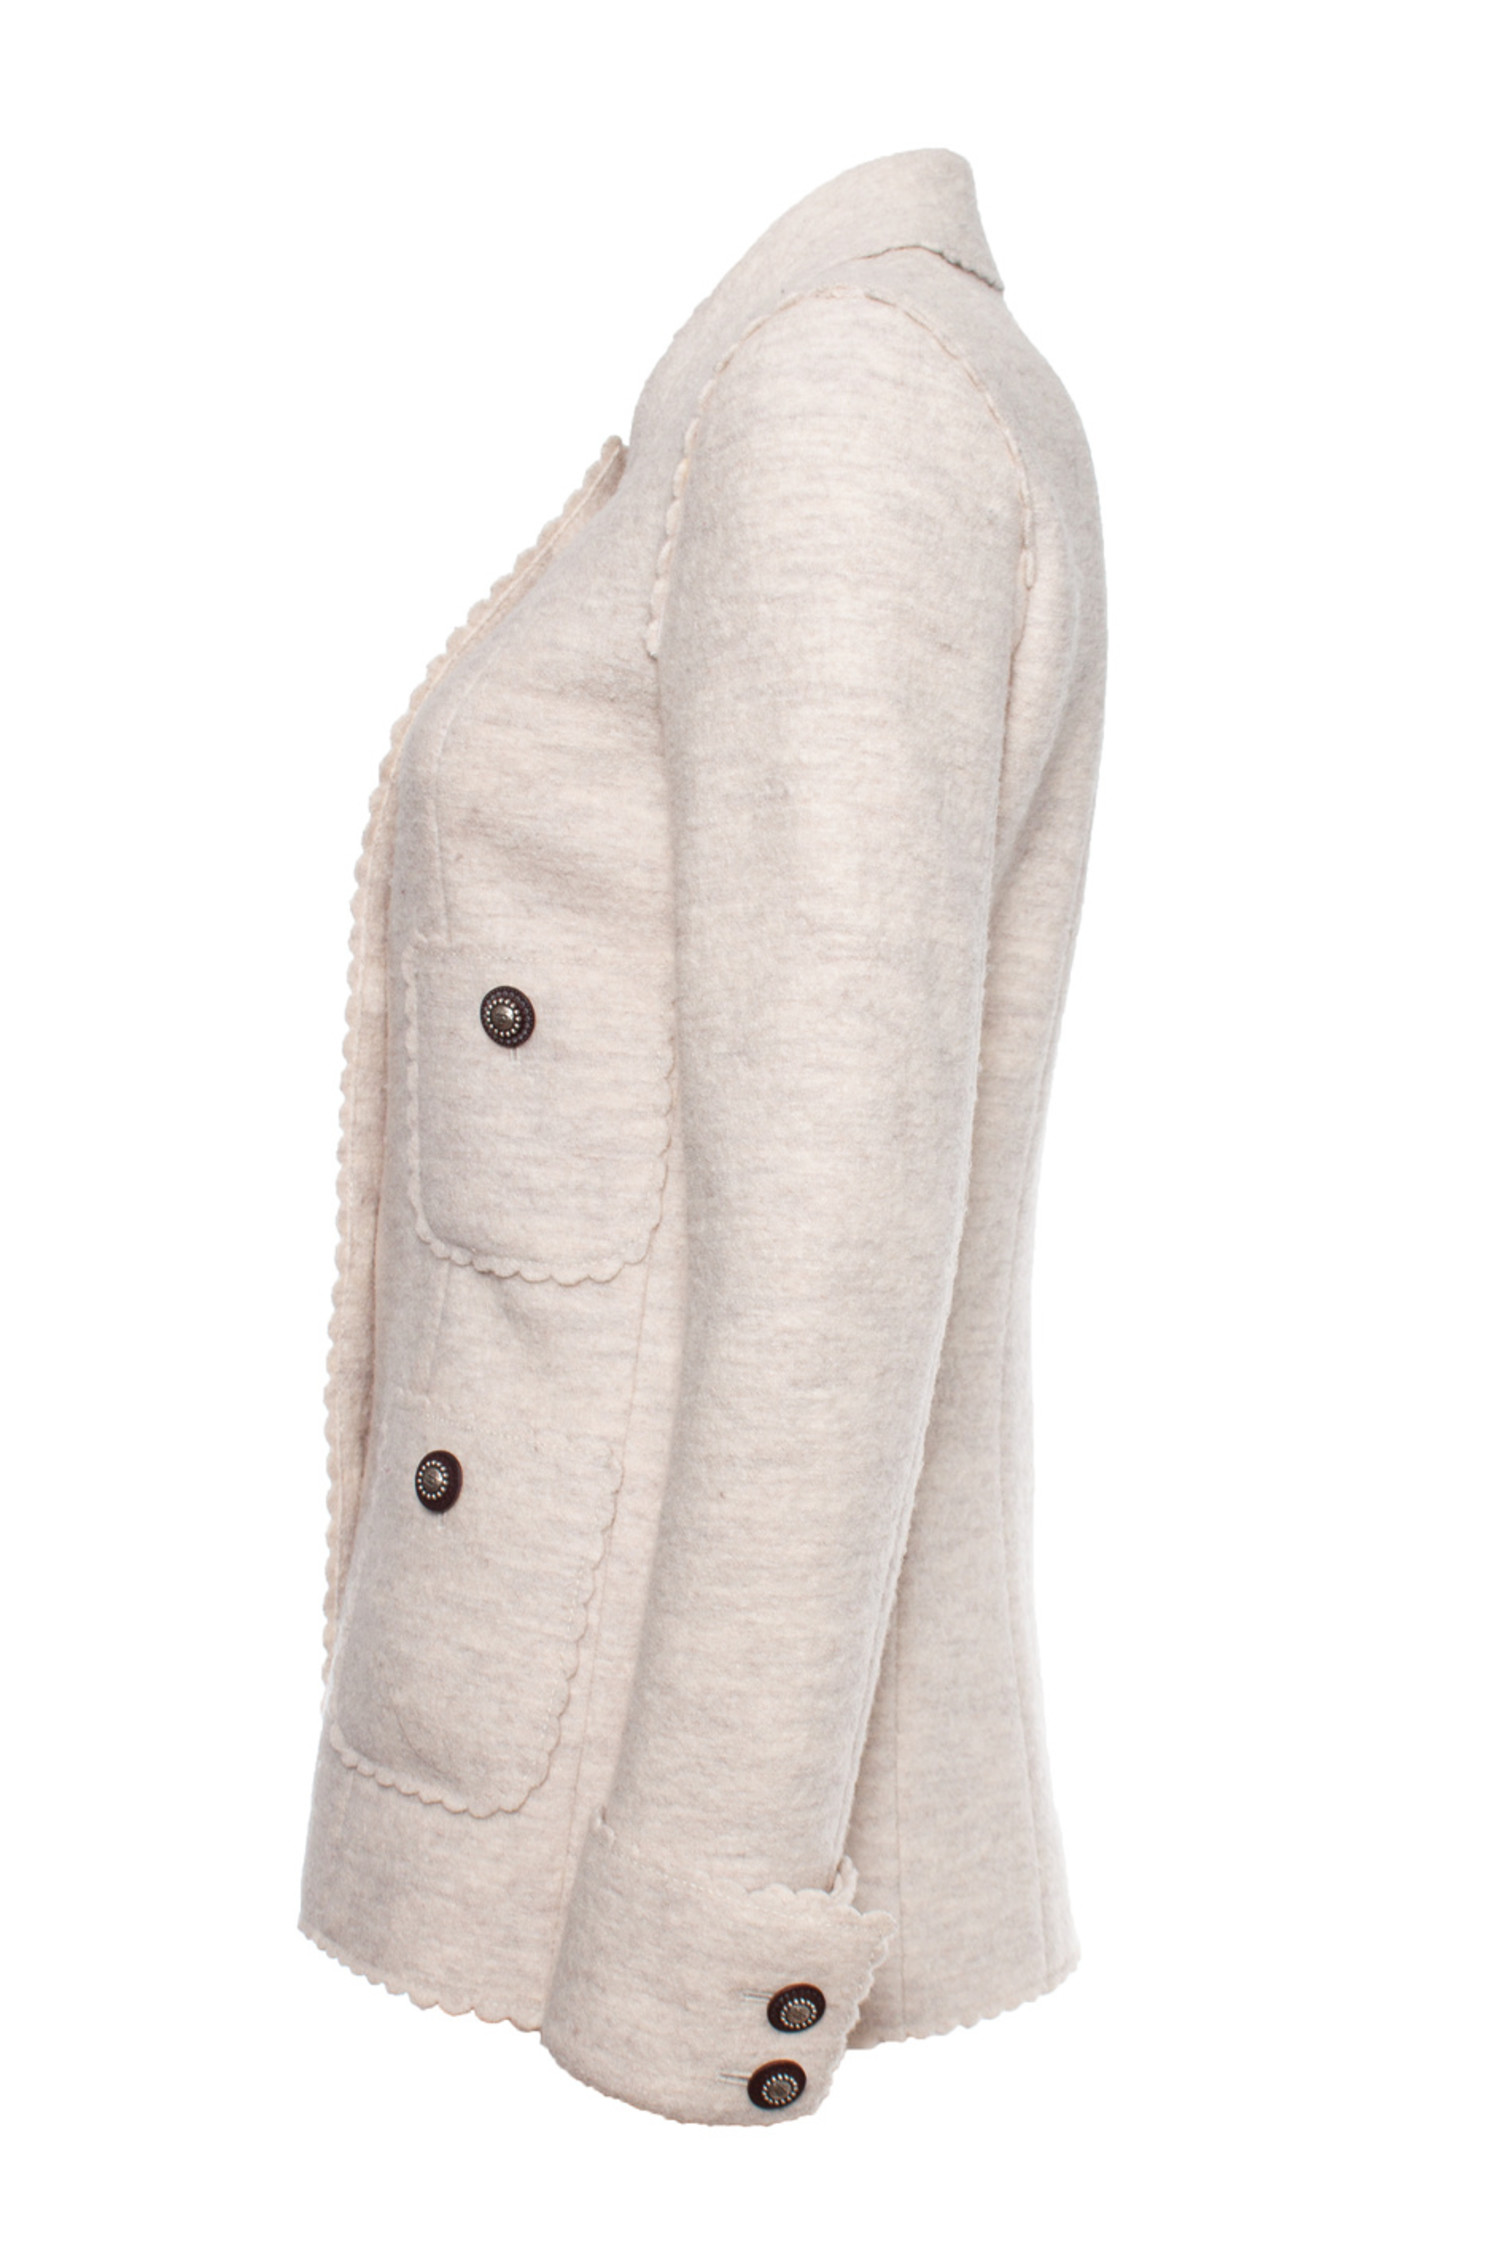 Chanel, cream colored wool jacket - Unique Designer Pieces